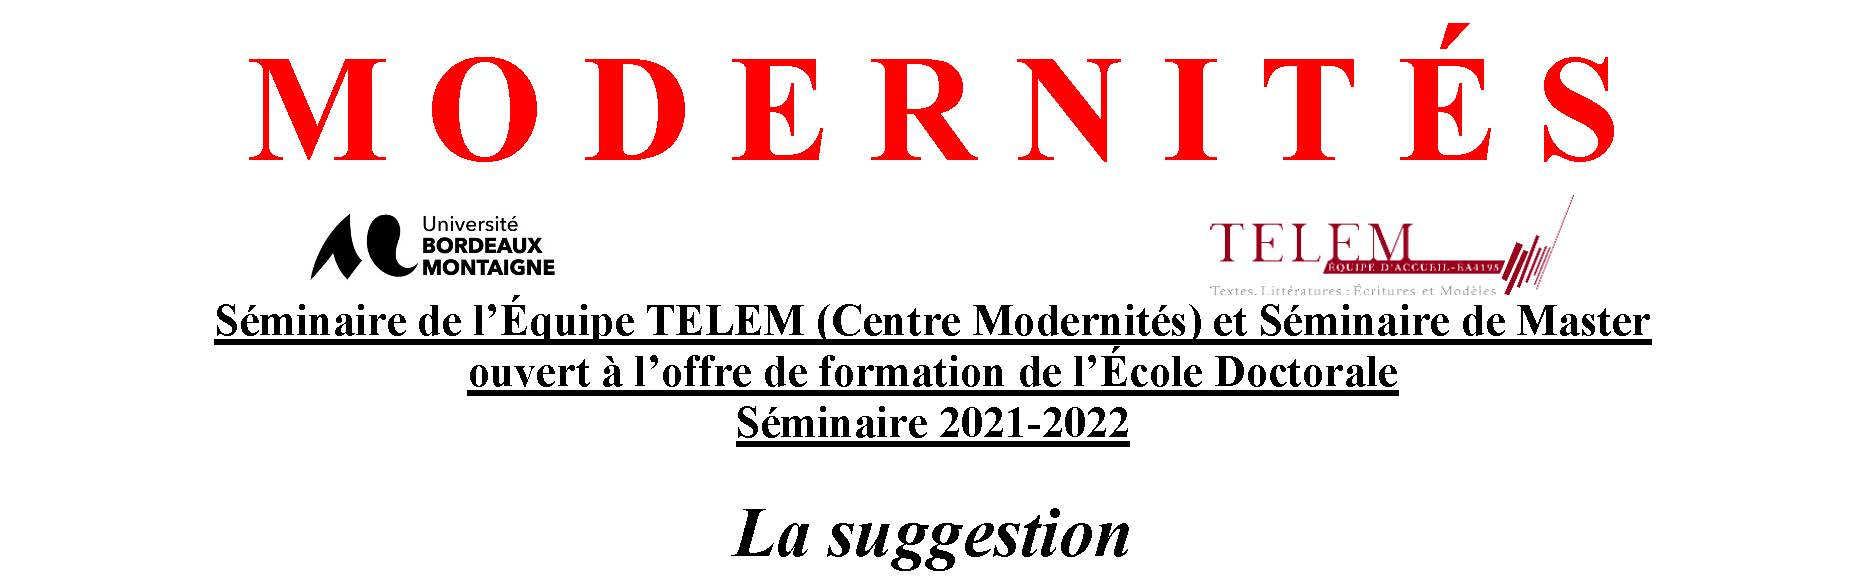 calendrier_séminaire_La_suggestion_II_2021-2022